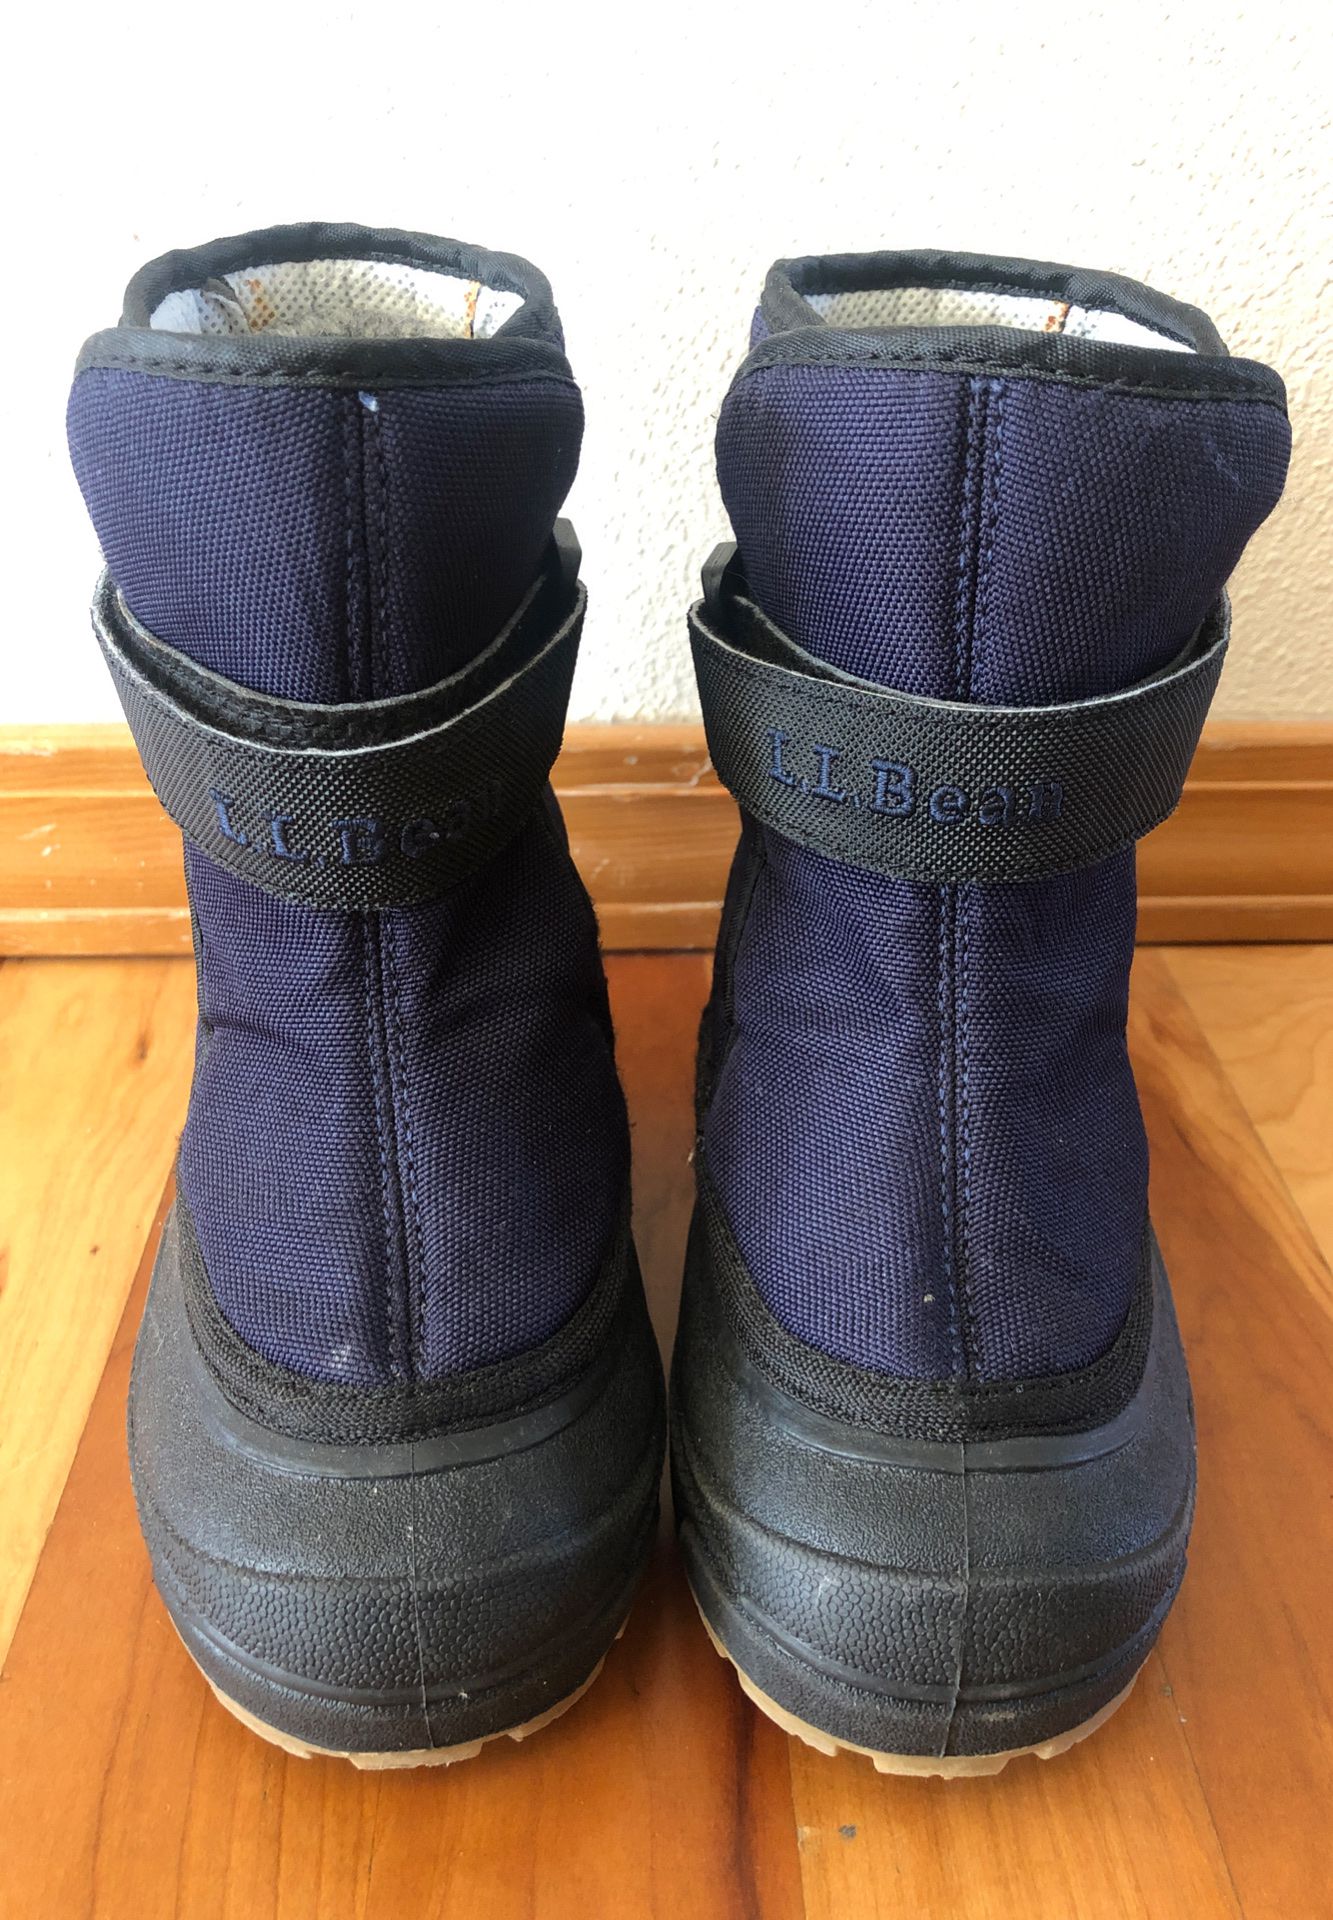 L.L. Bean toddler snow boots size 8